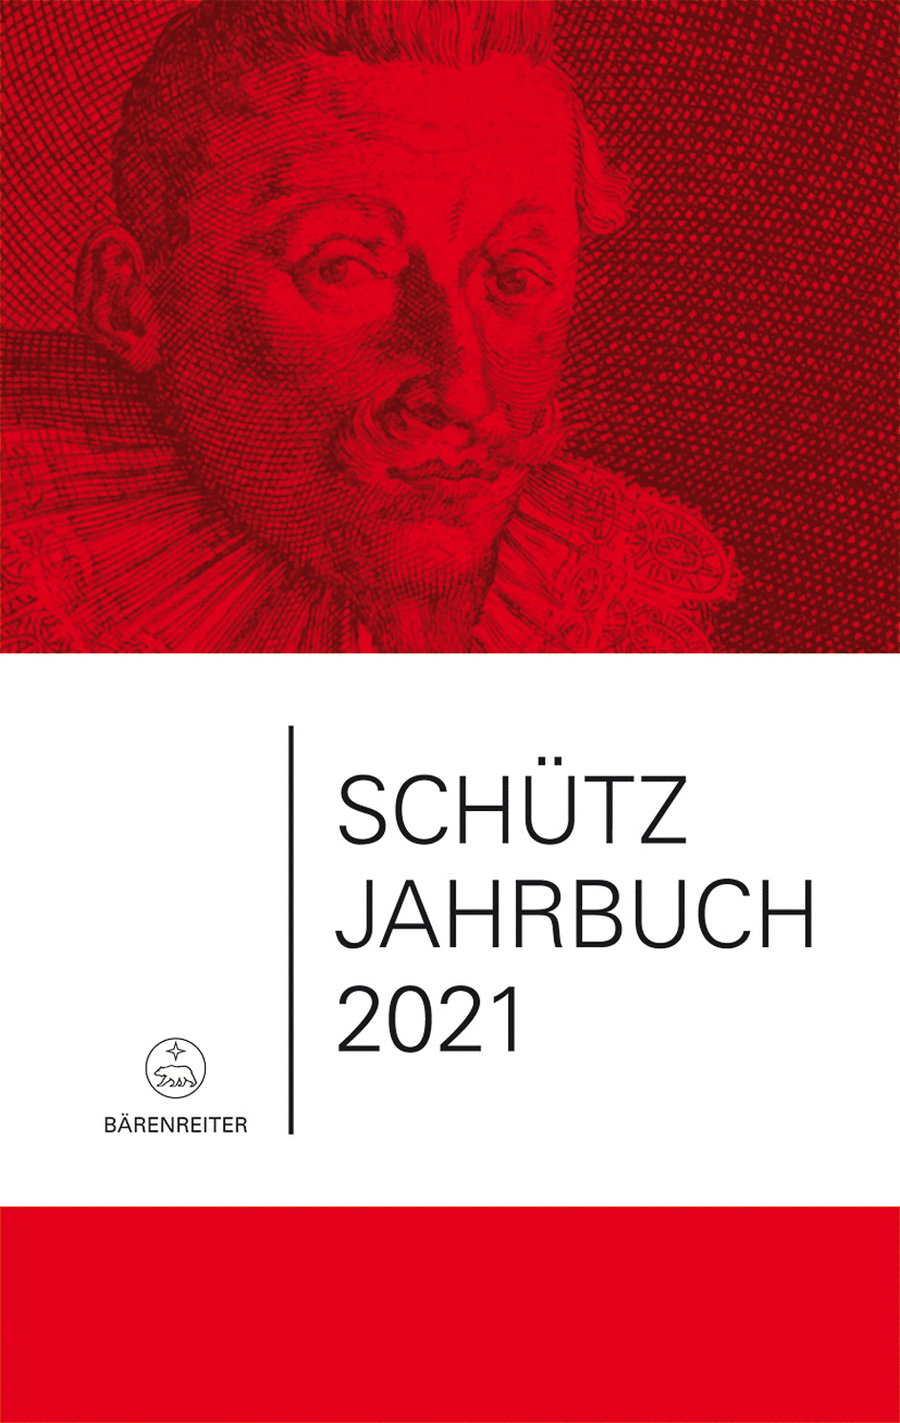 Schütz-Jahrbuch 2021, 43. Jahrgang